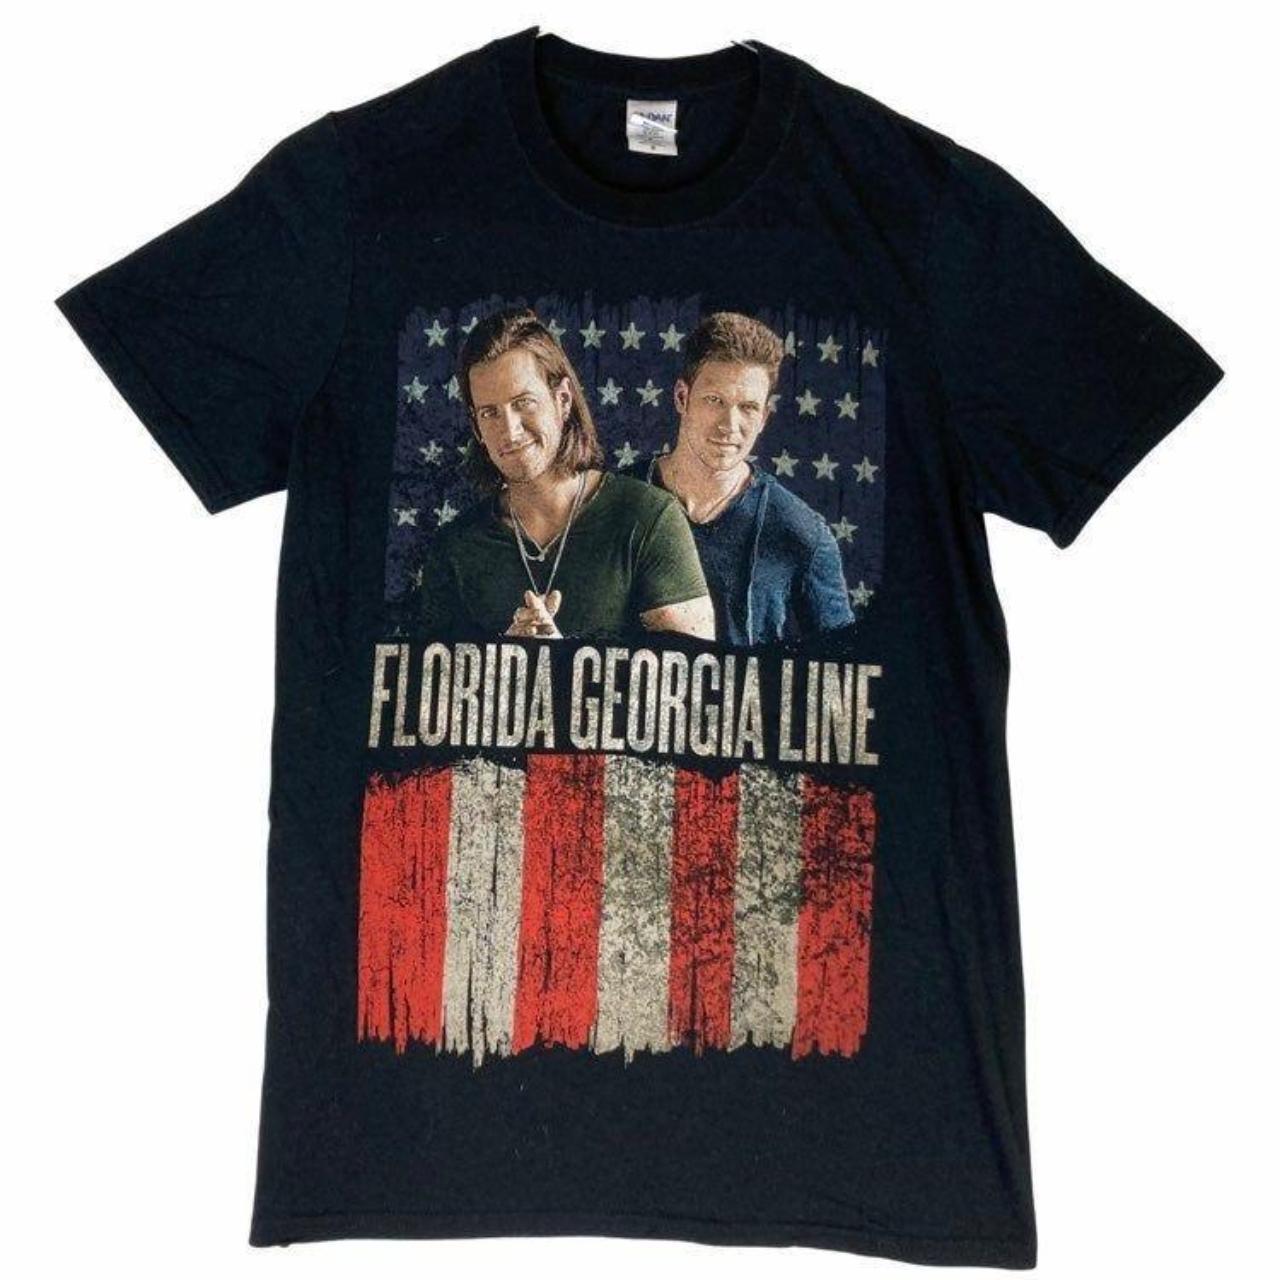 Product Image 1 - Item: Florida Georgia Line FGL